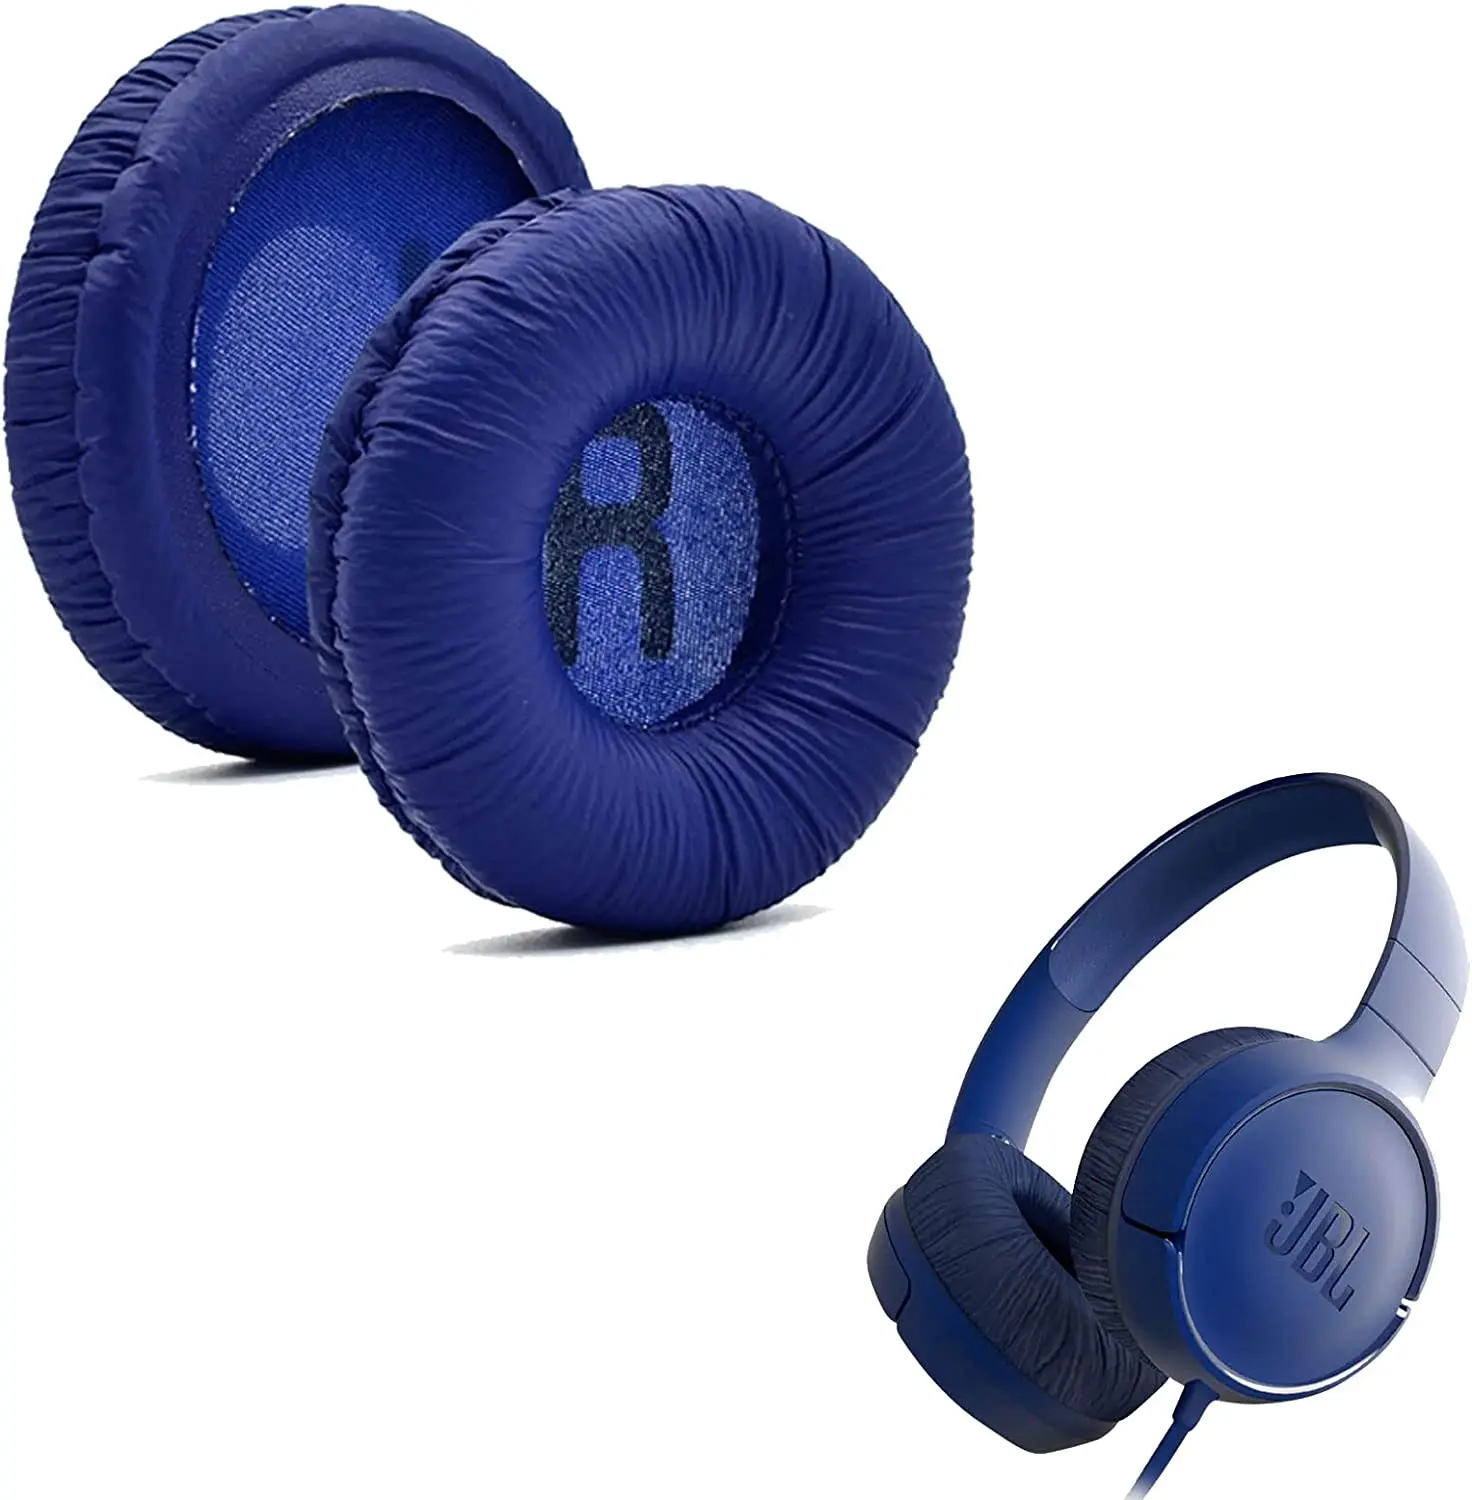 

Ear Pads Sponge Soft Foam Cushion Replacement for JBL Tune 600 T450 T450BT T500BT JR300BT Headphone Headset